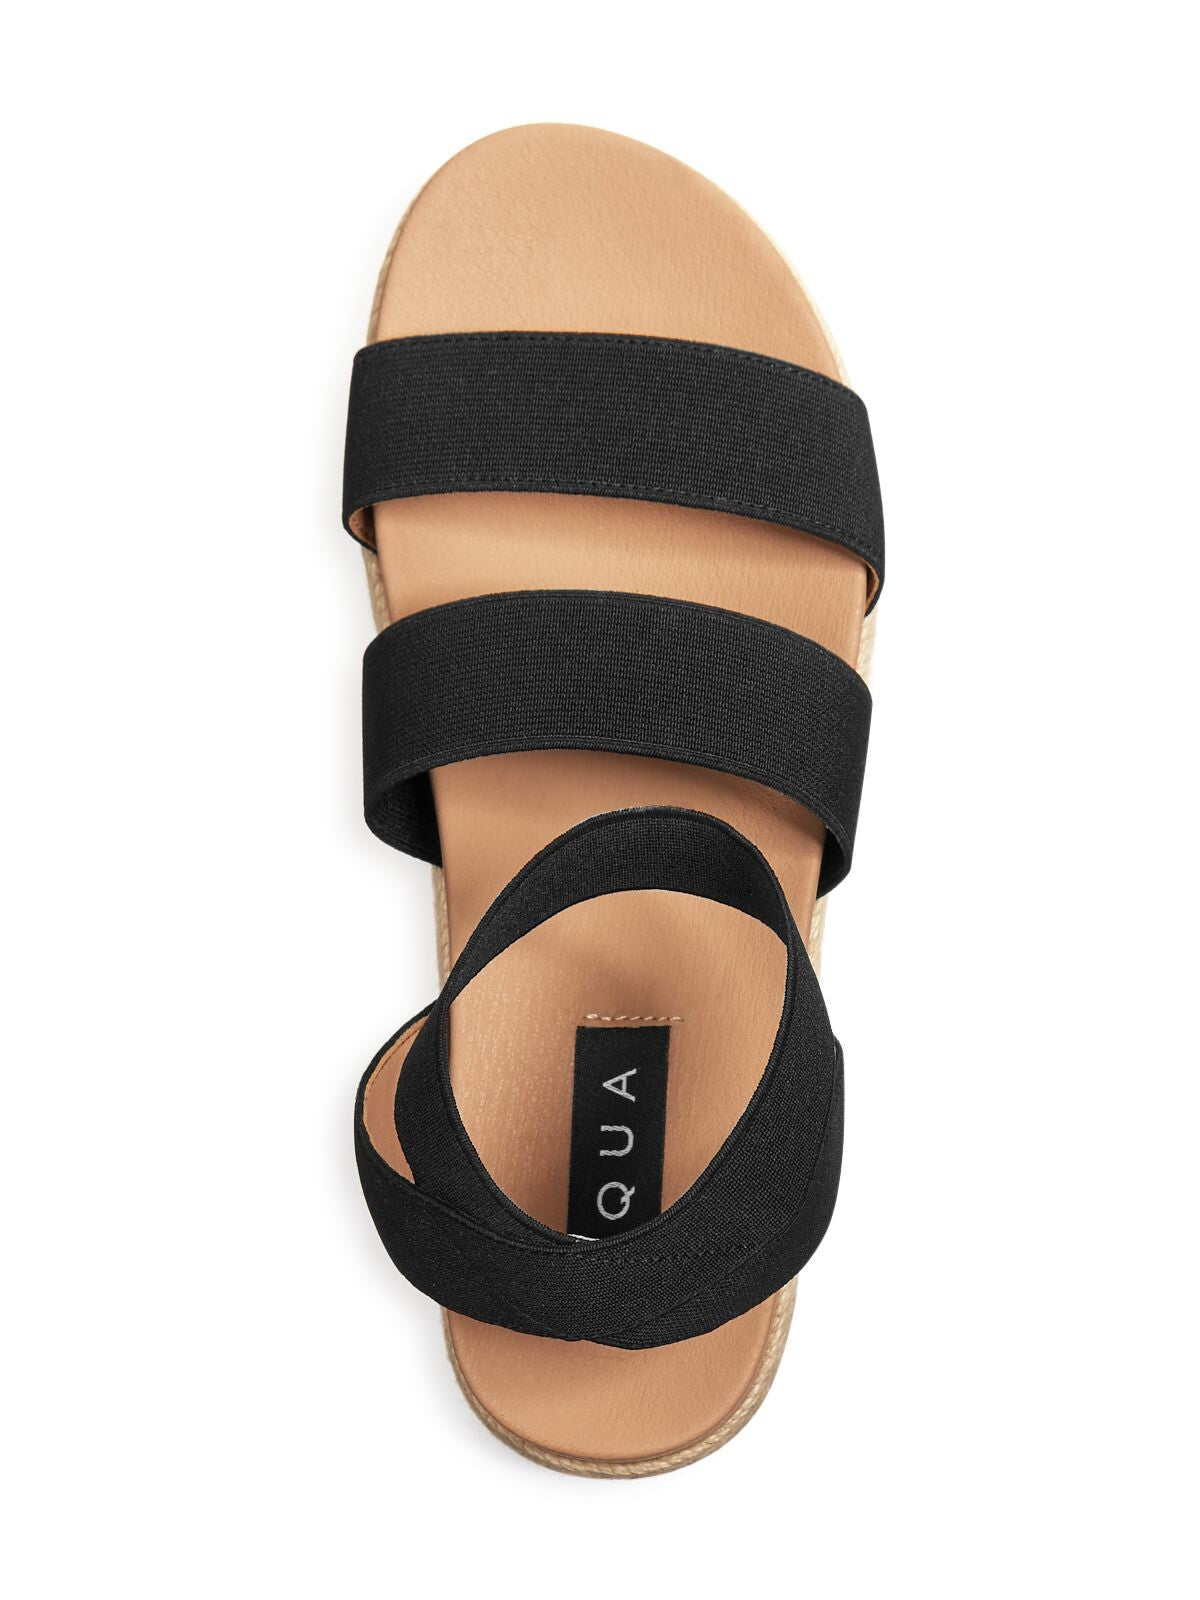 AQUA Womens Black Jute Accent Stretch Ankle Strap Tali Round Toe Platform Slip On Espadrille Shoes 6 M